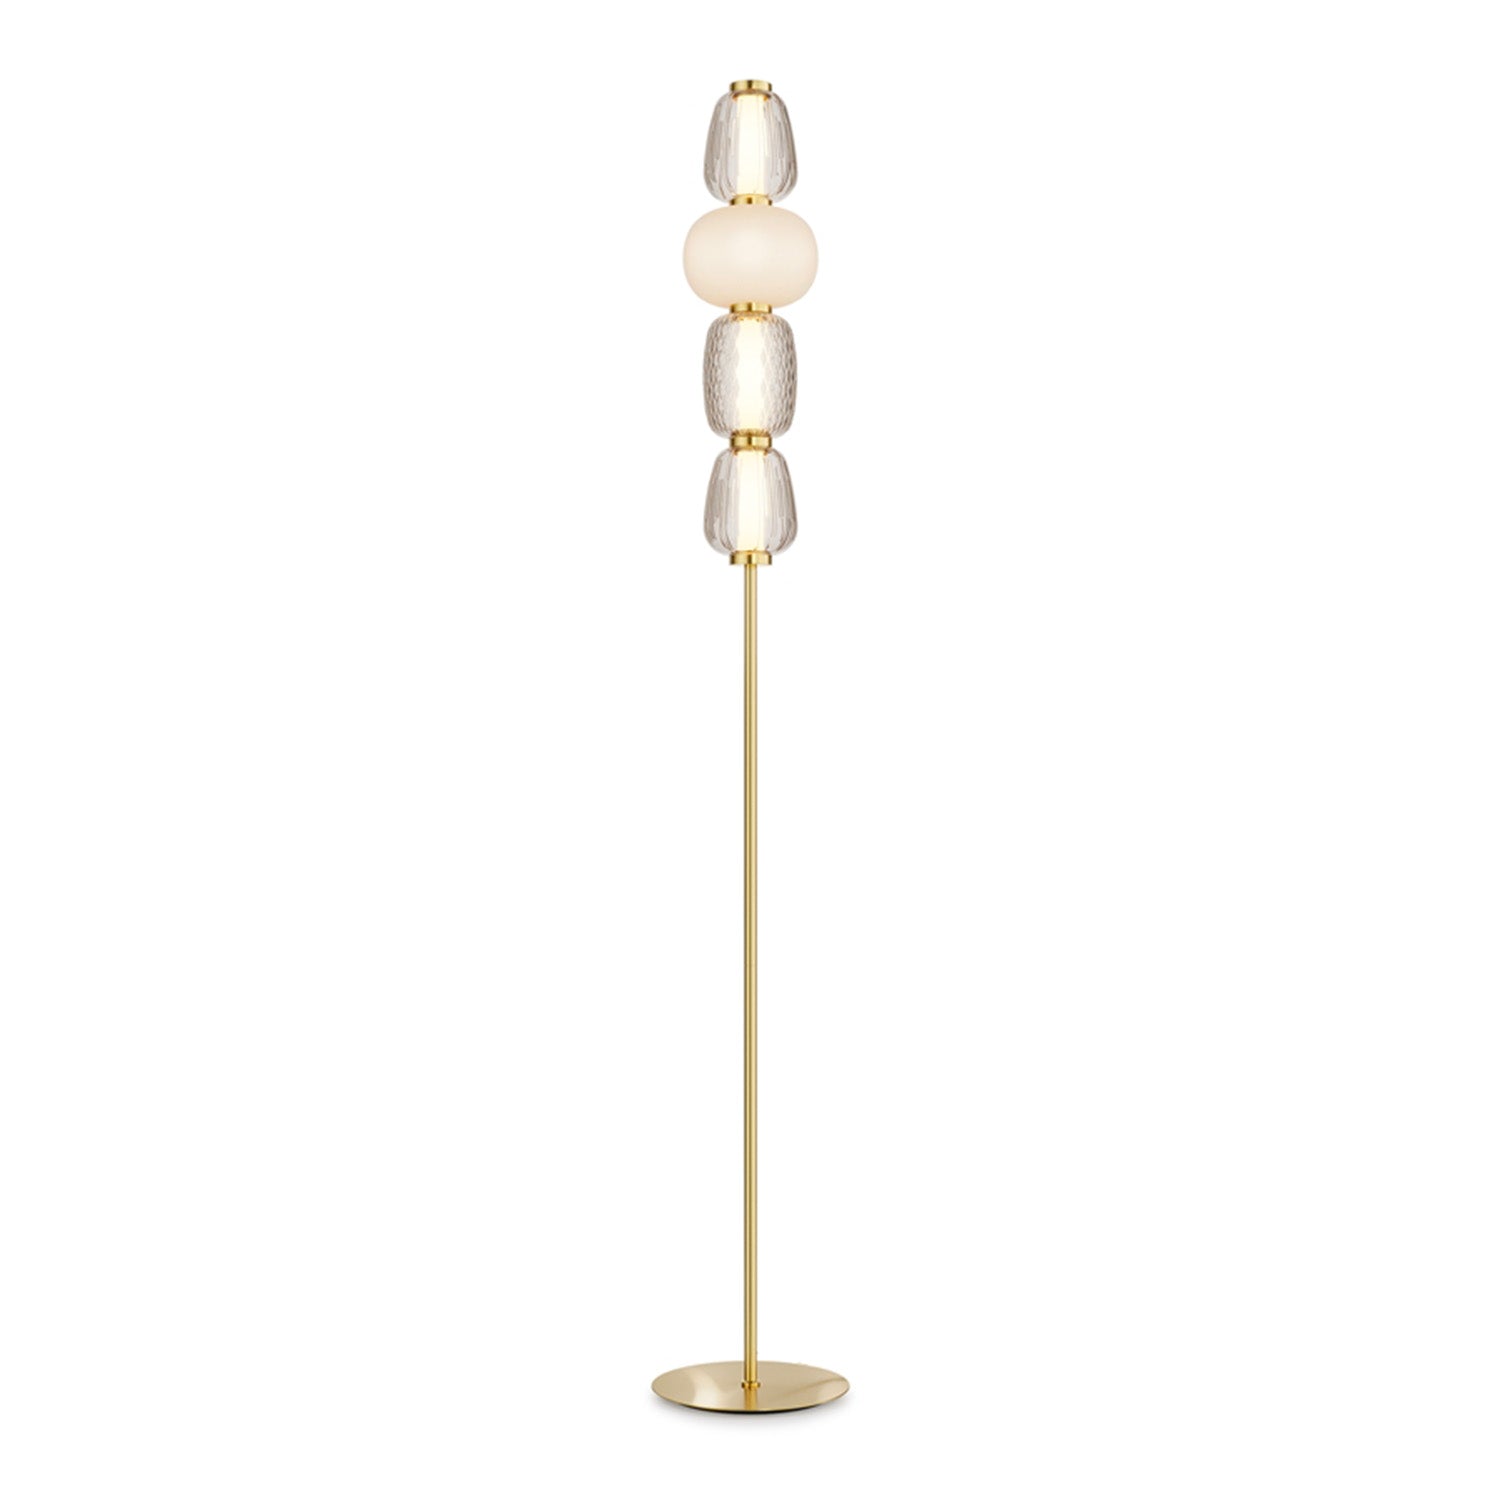 MUSTER – Stehlampe aus Glas und goldenem oder silbernem Stahl